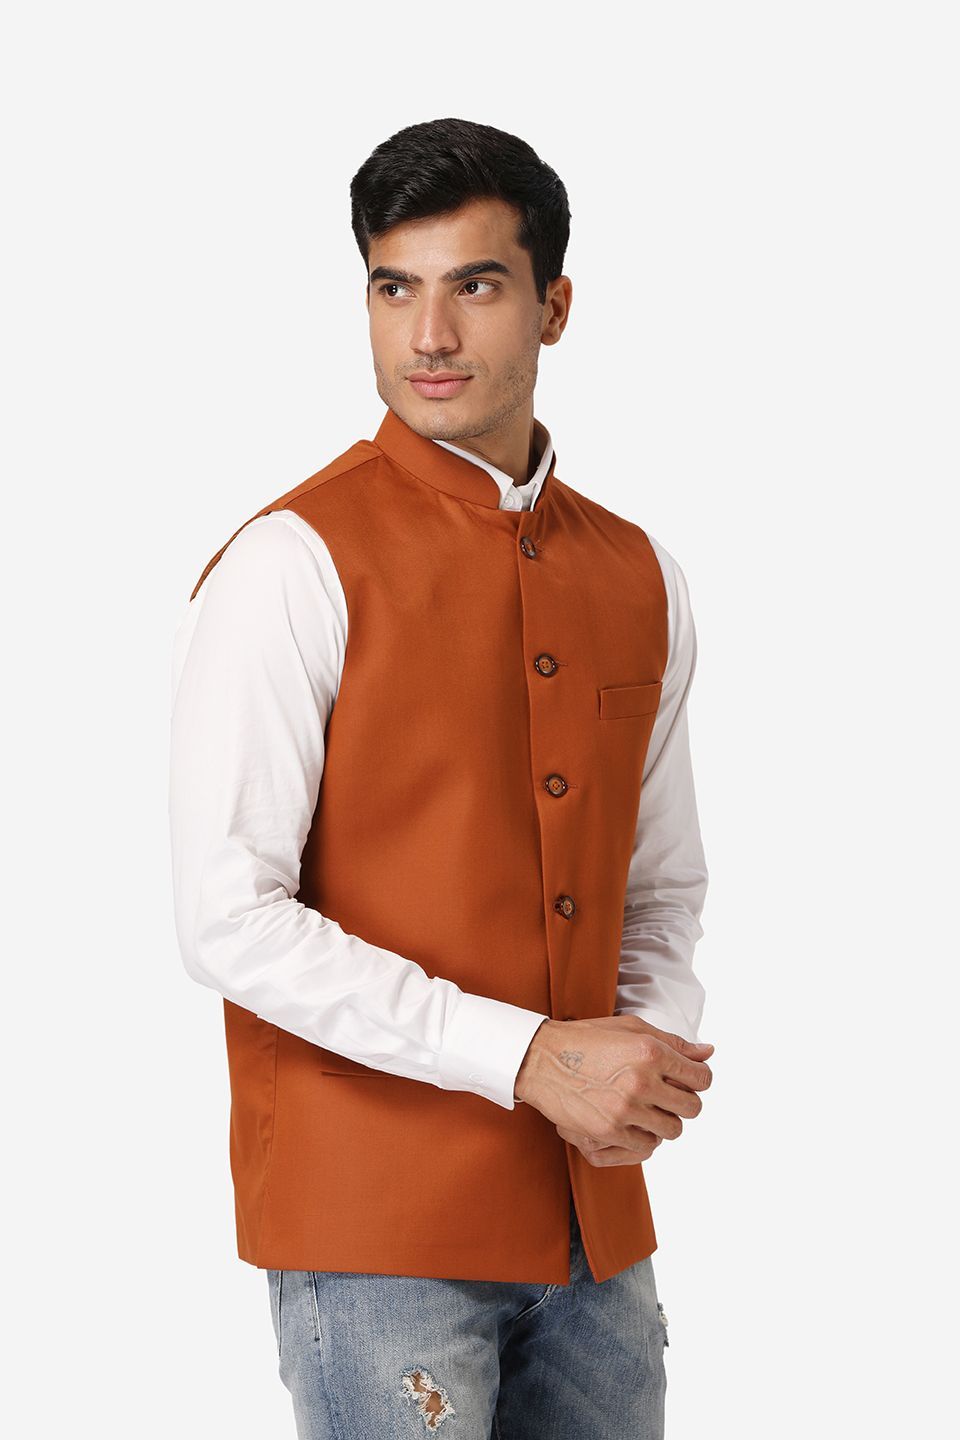 Wintage Men's Poly Cotton Festive and Casual Nehru Jacket Vest Waistcoat : Orange